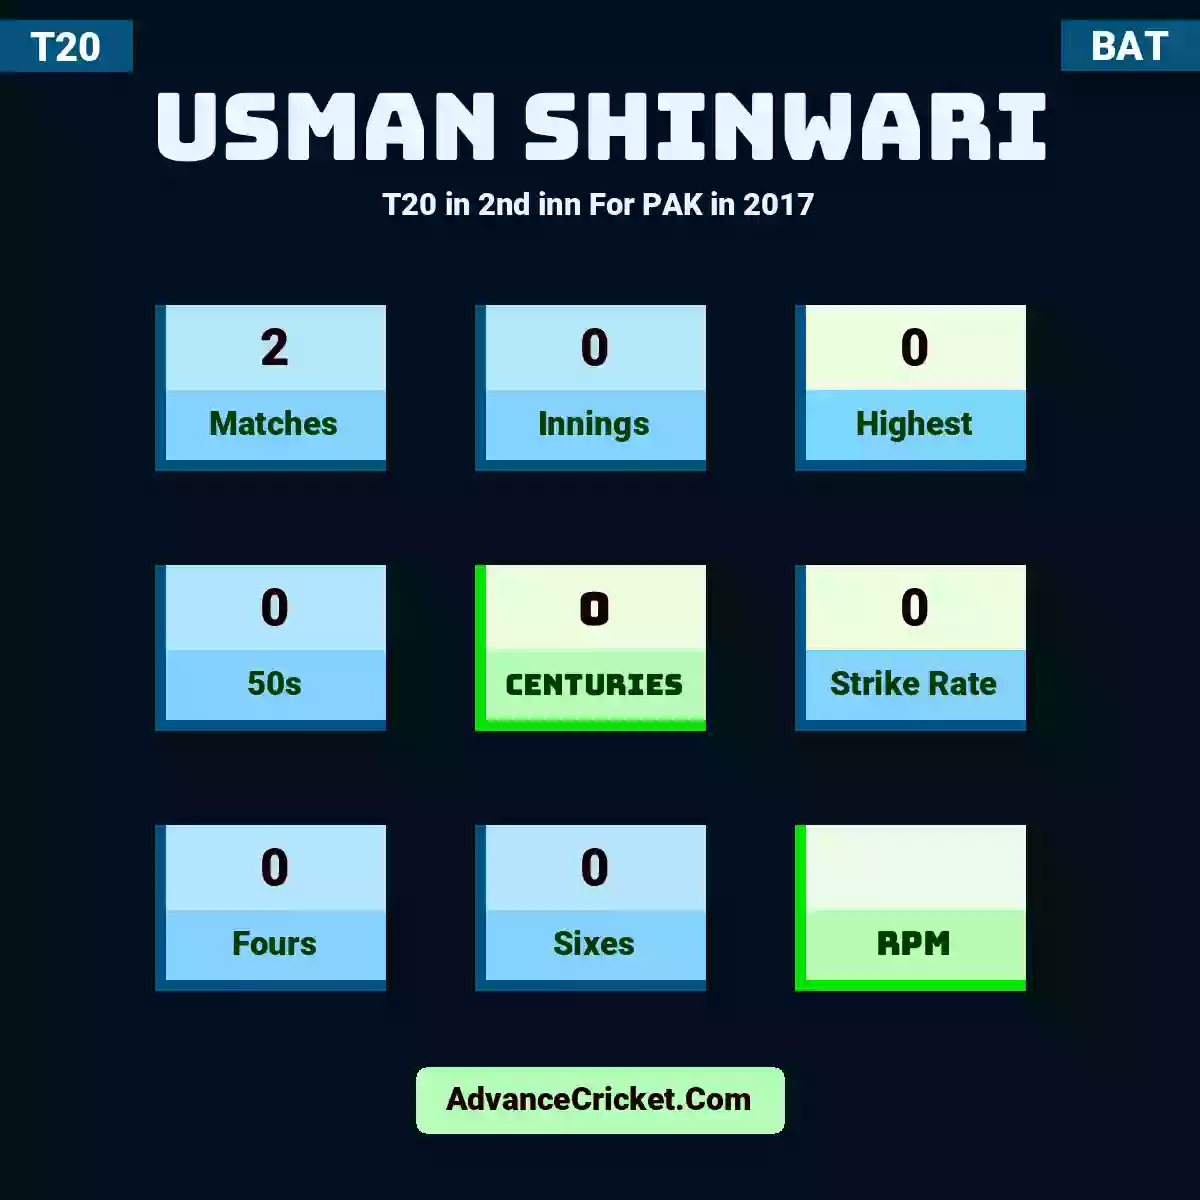 Usman Shinwari T20  in 2nd inn For PAK in 2017, Usman Shinwari played 2 matches, scored 0 runs as highest, 0 half-centuries, and 0 centuries, with a strike rate of 0. U.Shinwari hit 0 fours and 0 sixes.